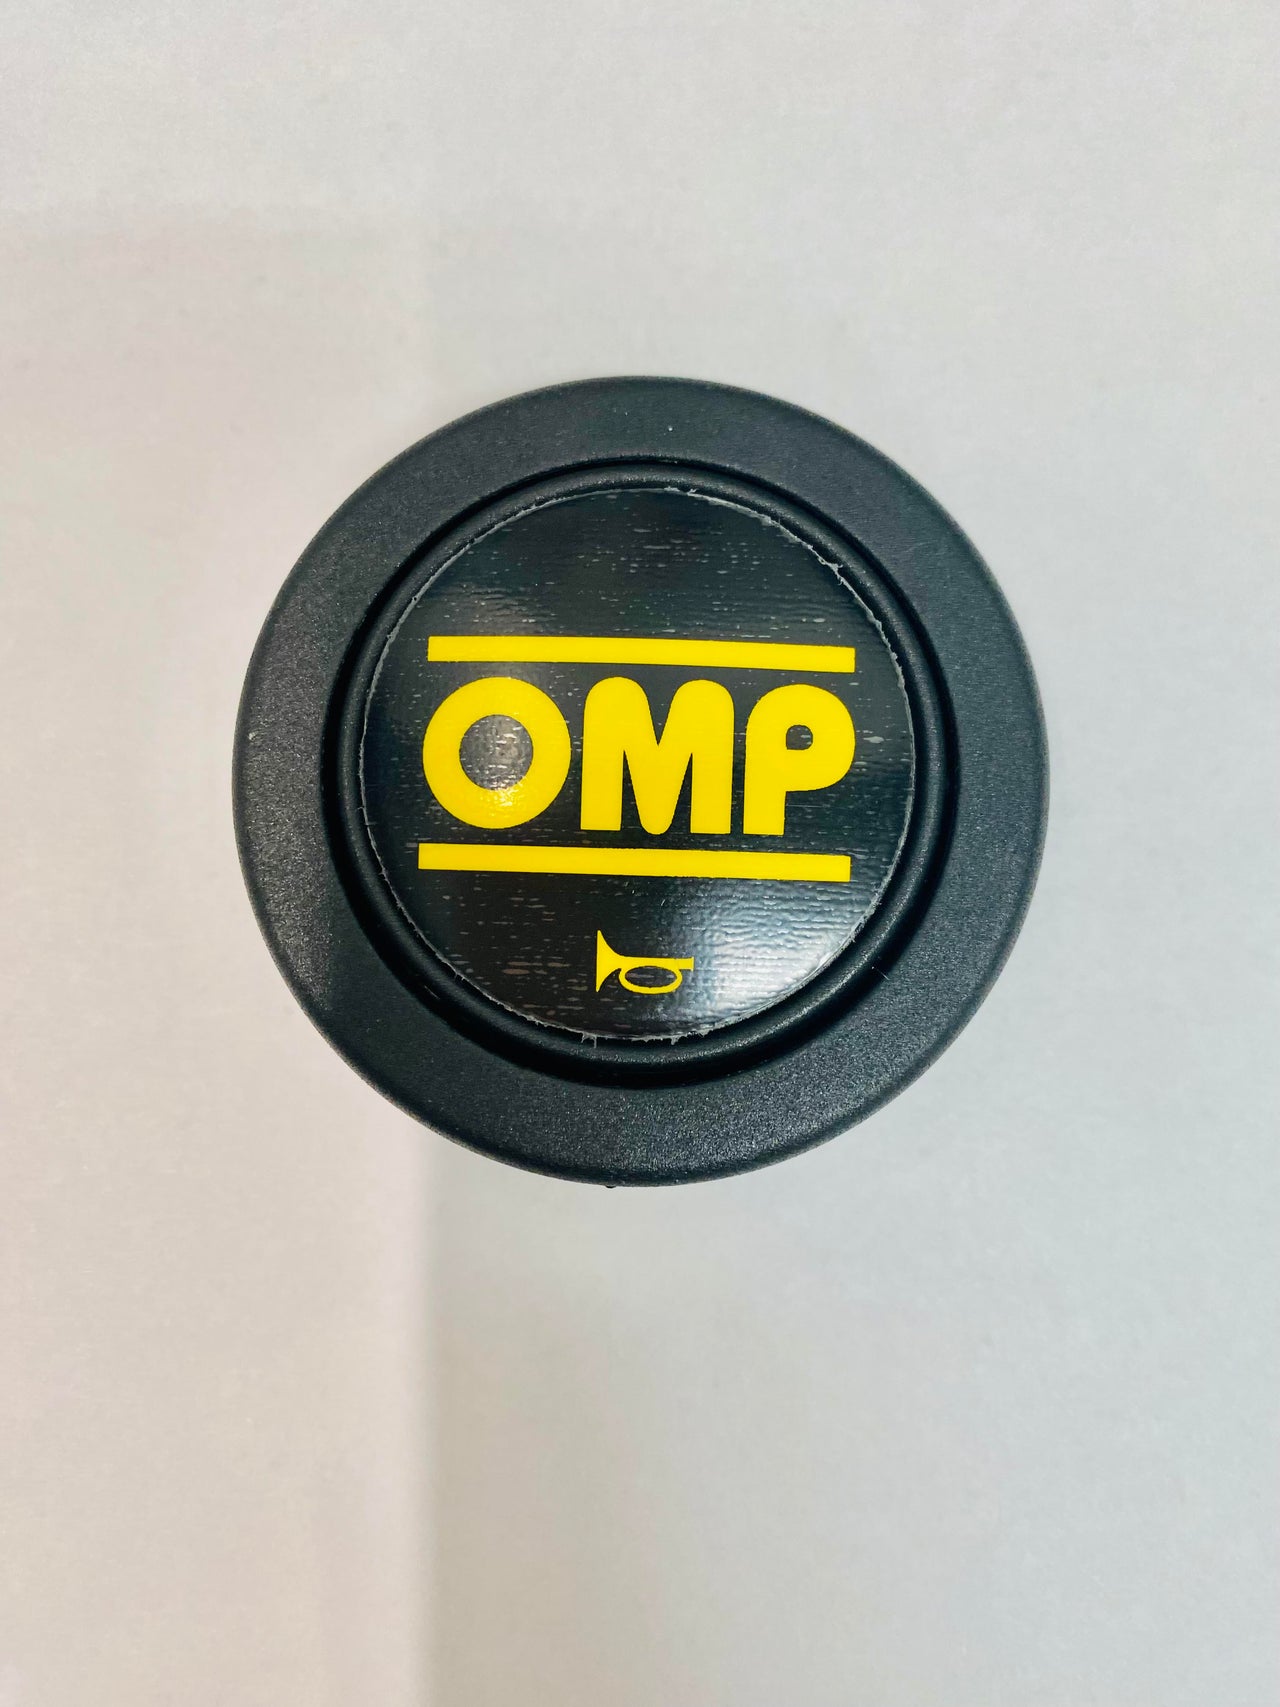 OMP Replacement Center Horn Button